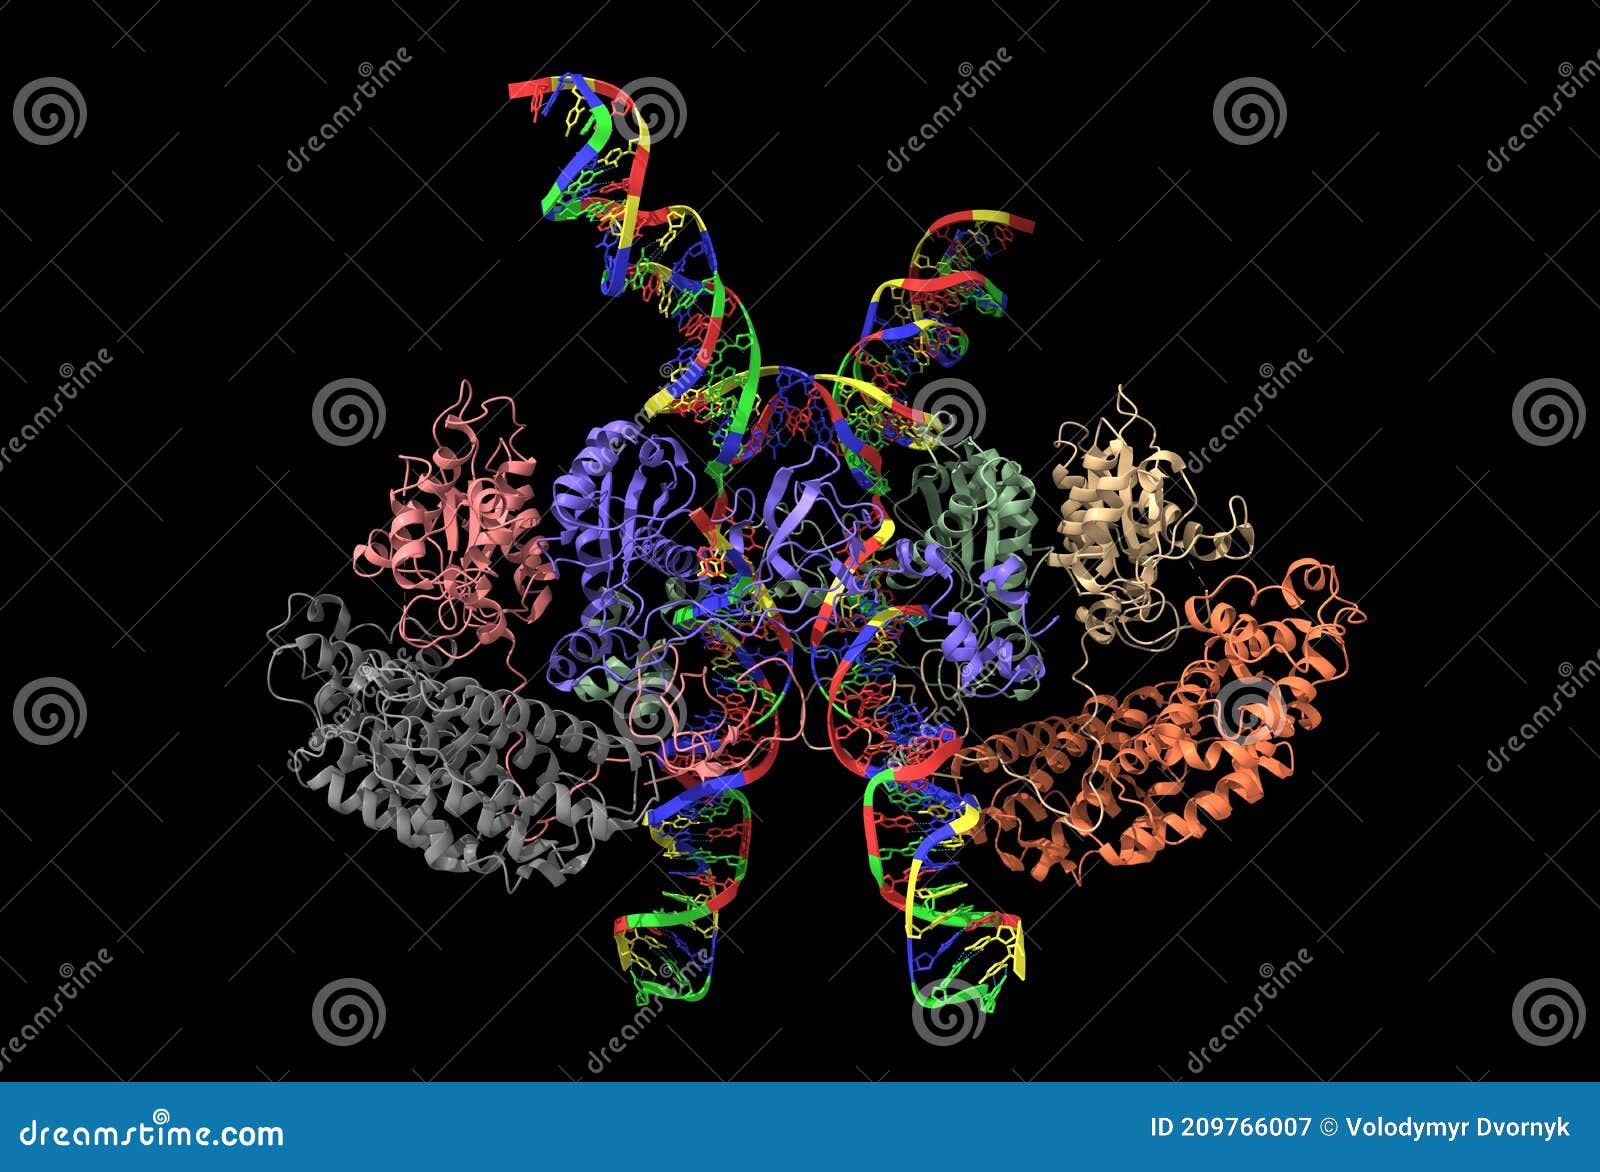 cryo-em structure of human t-cell leukemia virus type-1 htlv-1 intasome